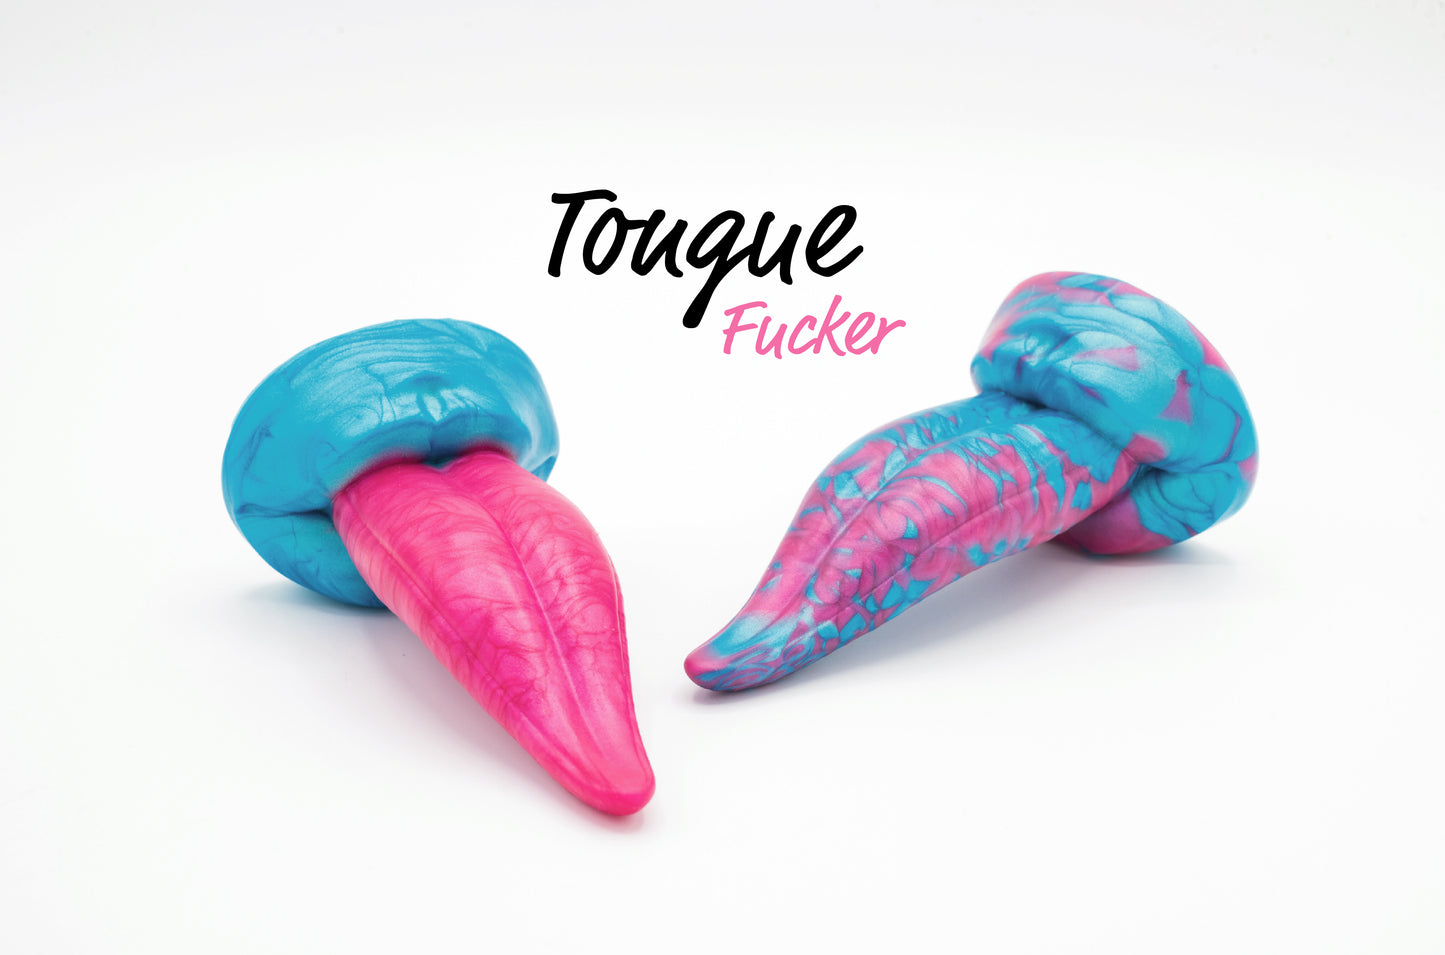 Tongue Finger Fucker